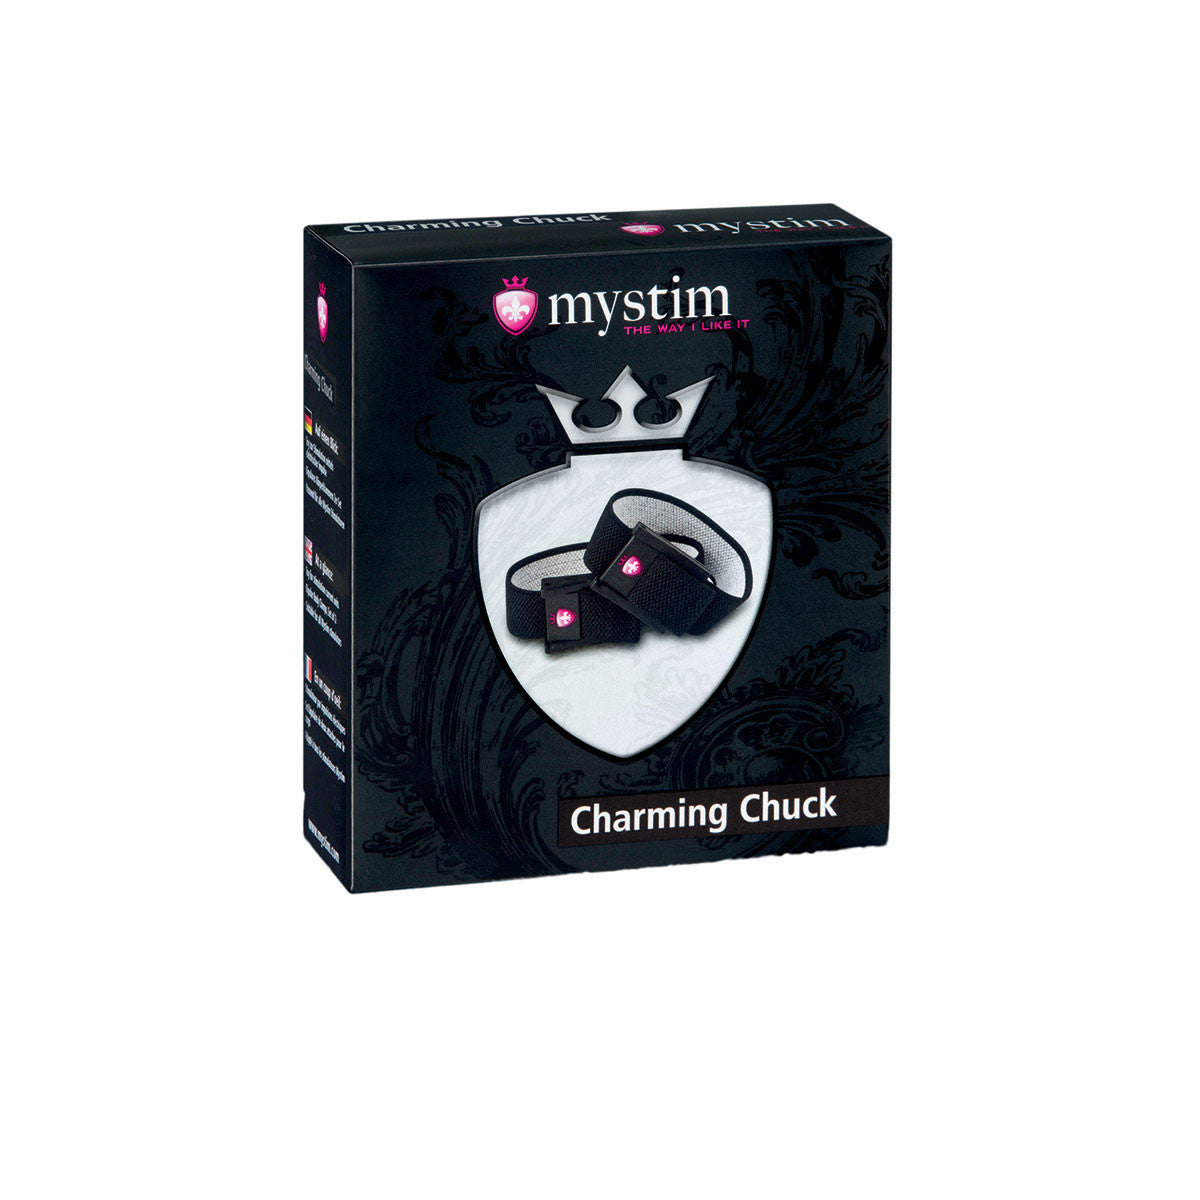 Mystim Charming Chuck - Strap Set of 2 w/ 2mm Adaptor in Melody's Room